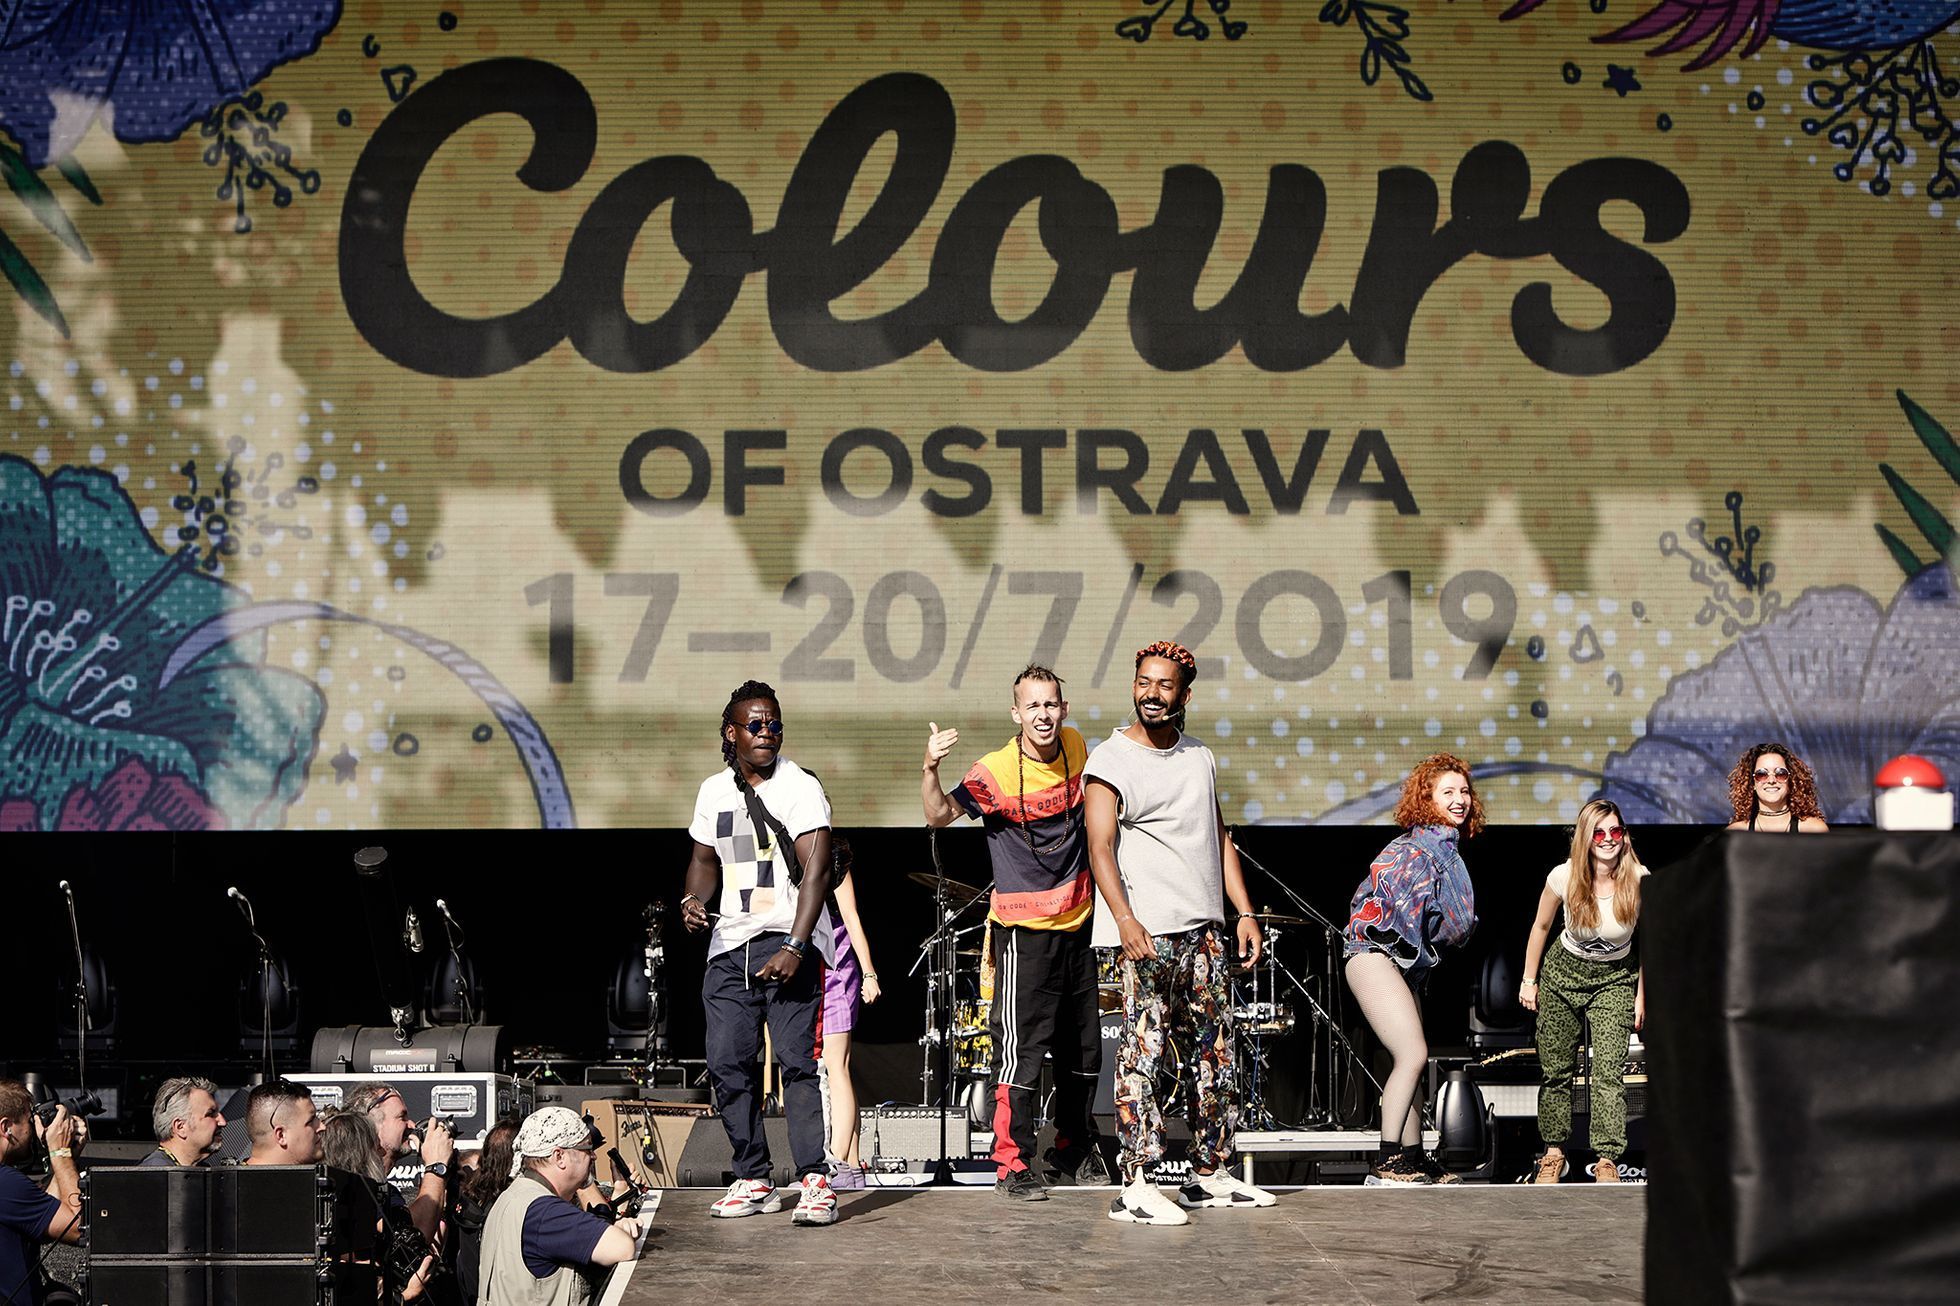 Colours of Ostrava 2019